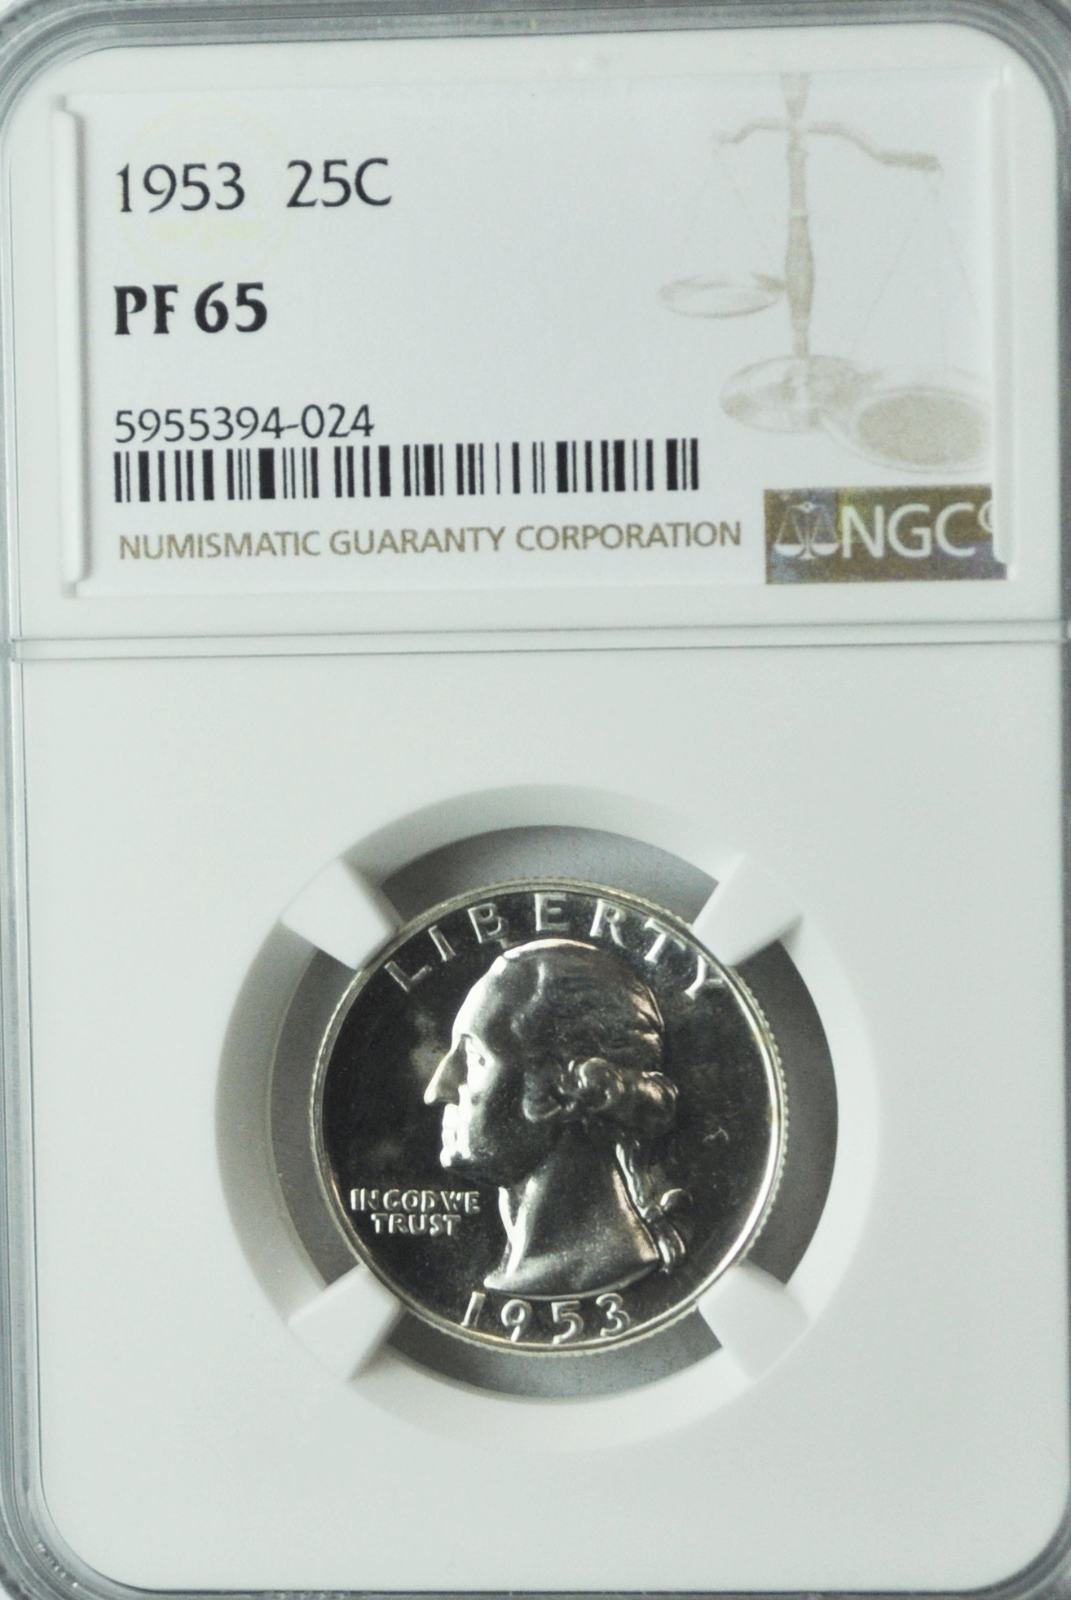 1953 25c Washington Proof Silver Quarter Dollar NGC PF65 FS-901 Recut Feathers